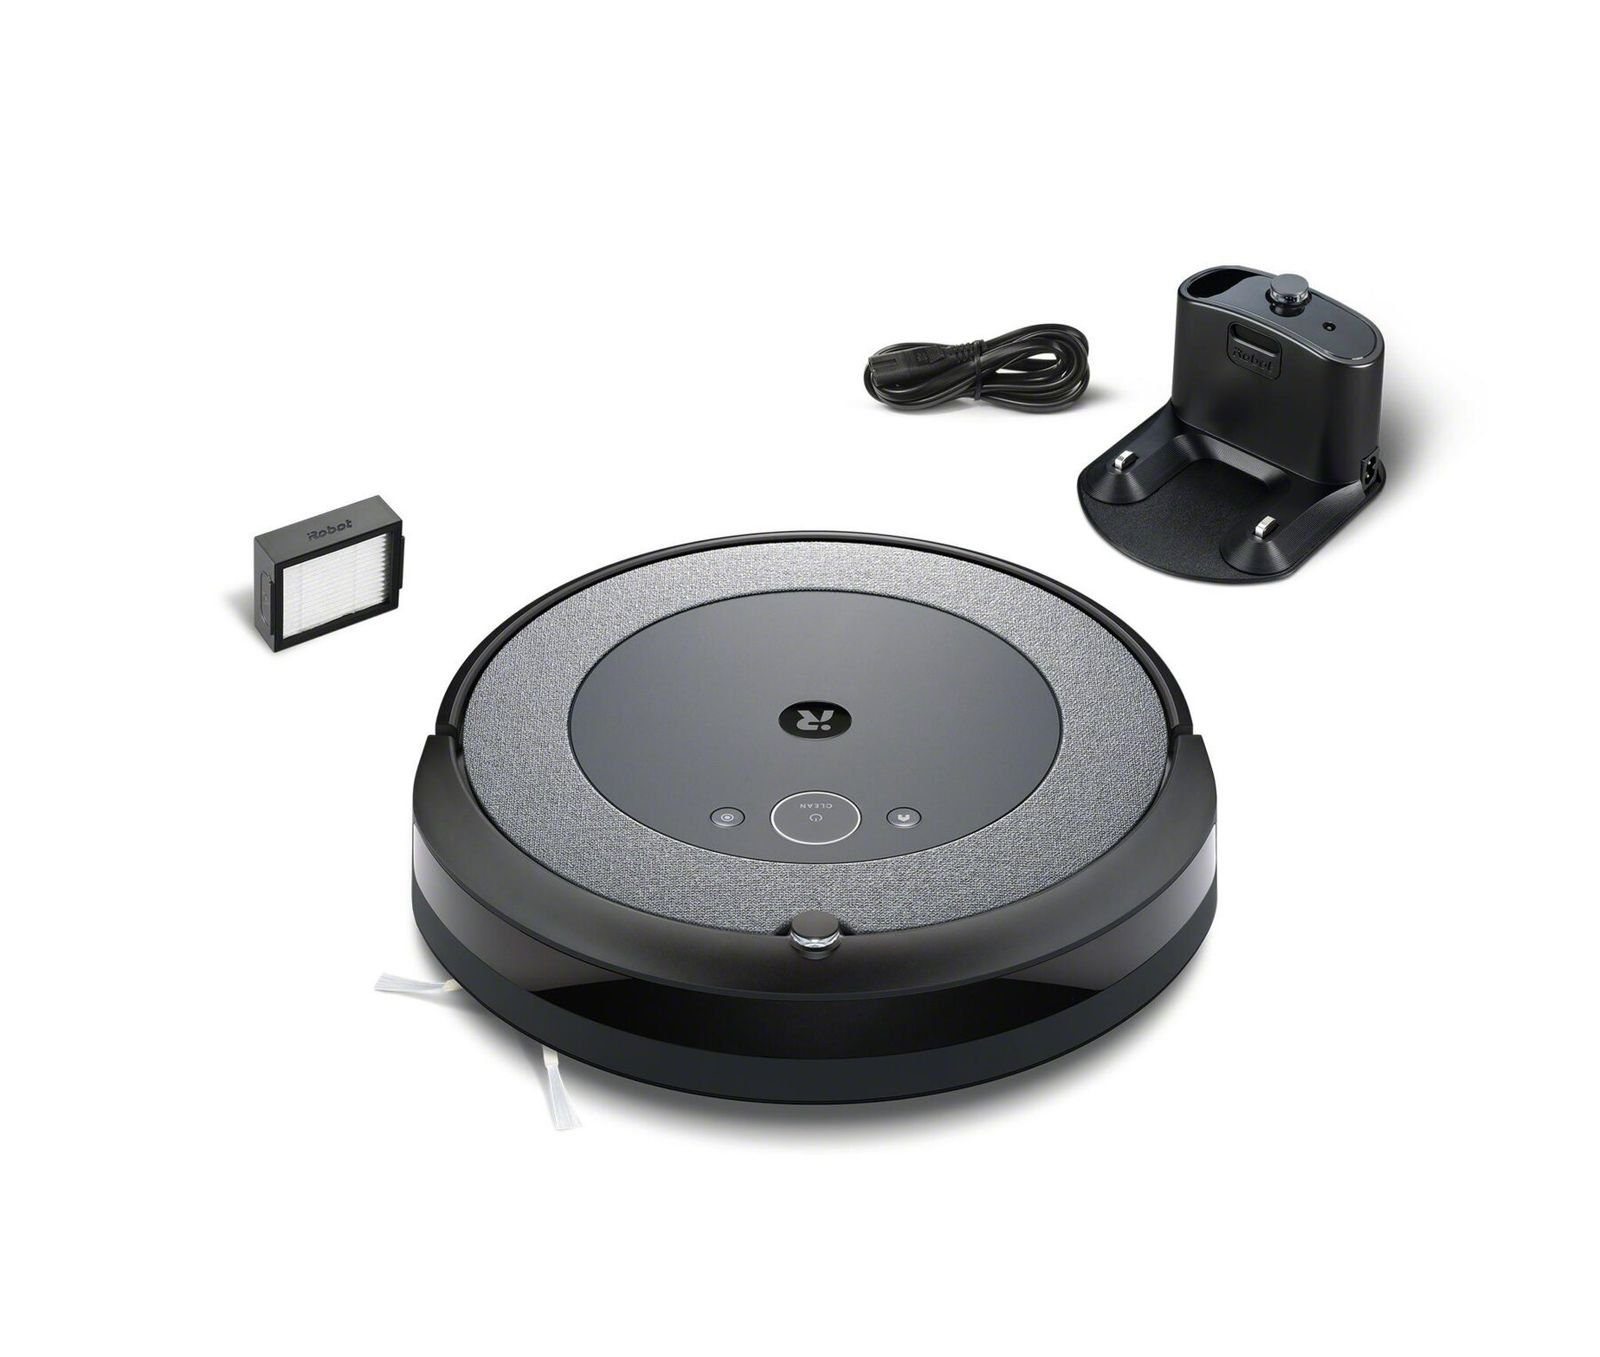 Roomba Saugroboter iRobot i5